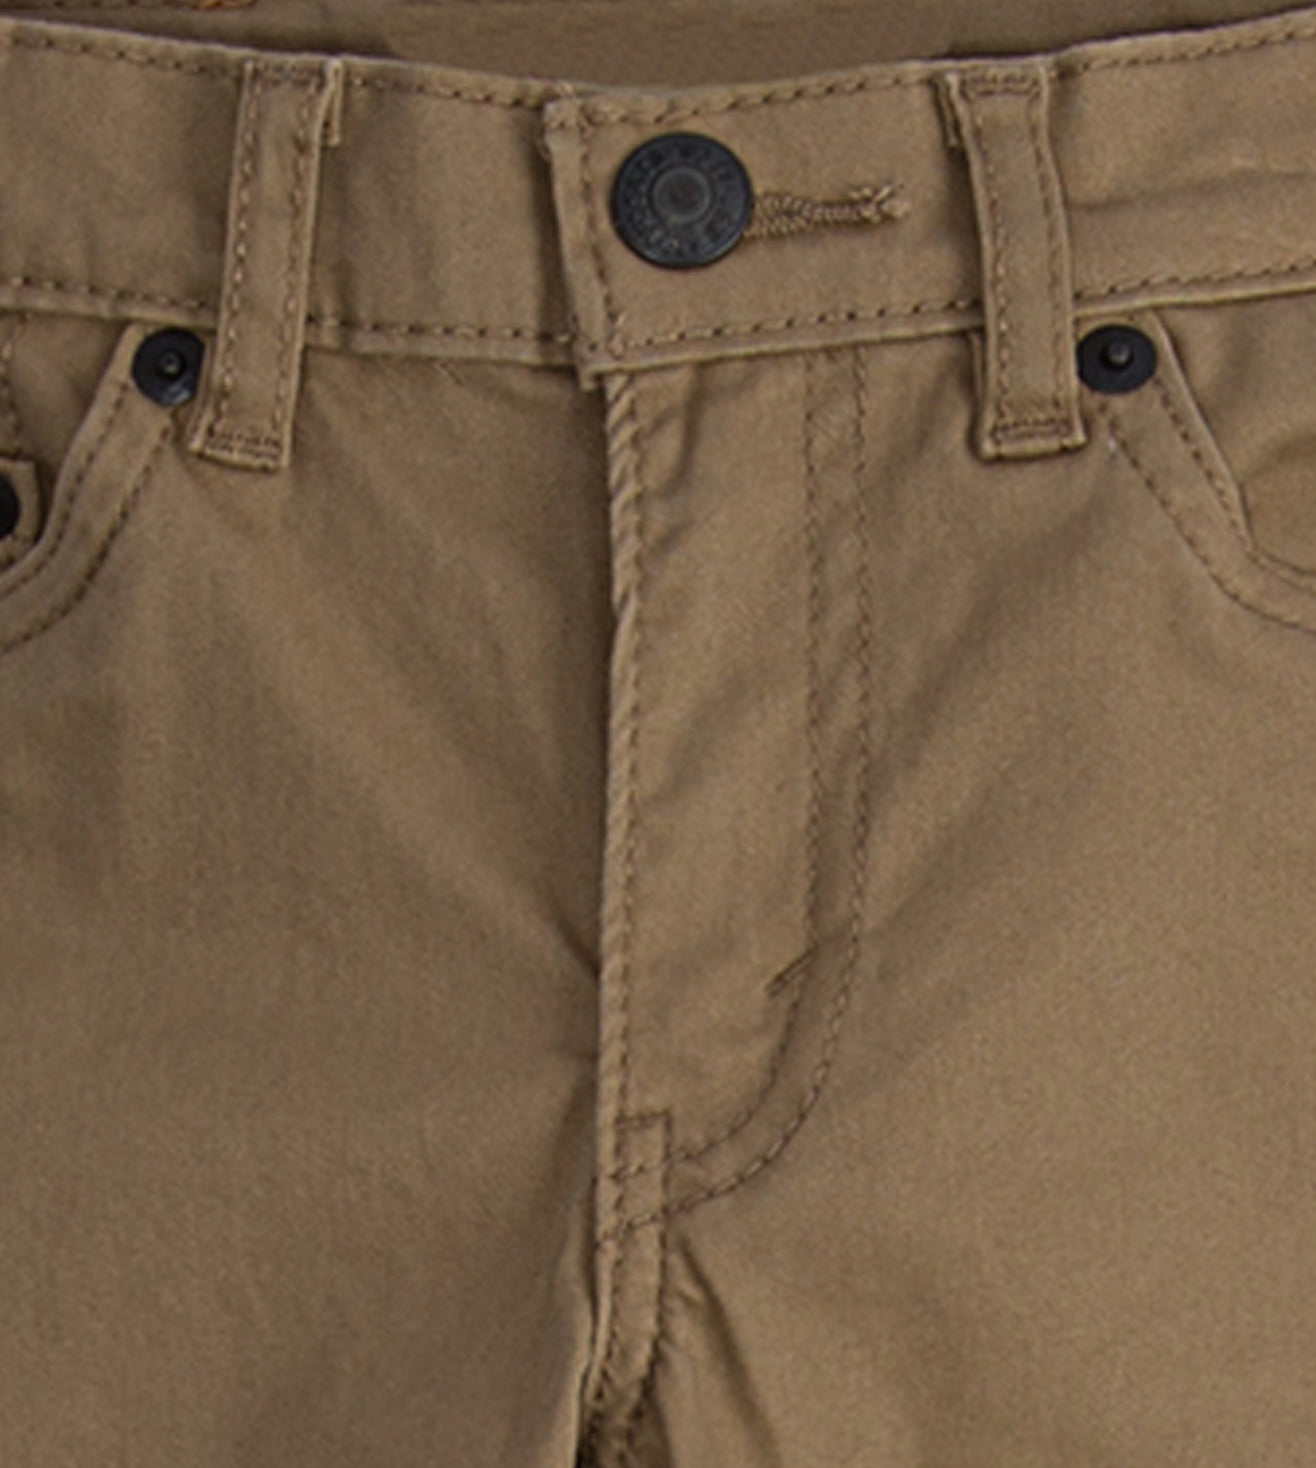 Levi's® 511™ Slim Fit Soft Brushed Pants Pants Levi's   